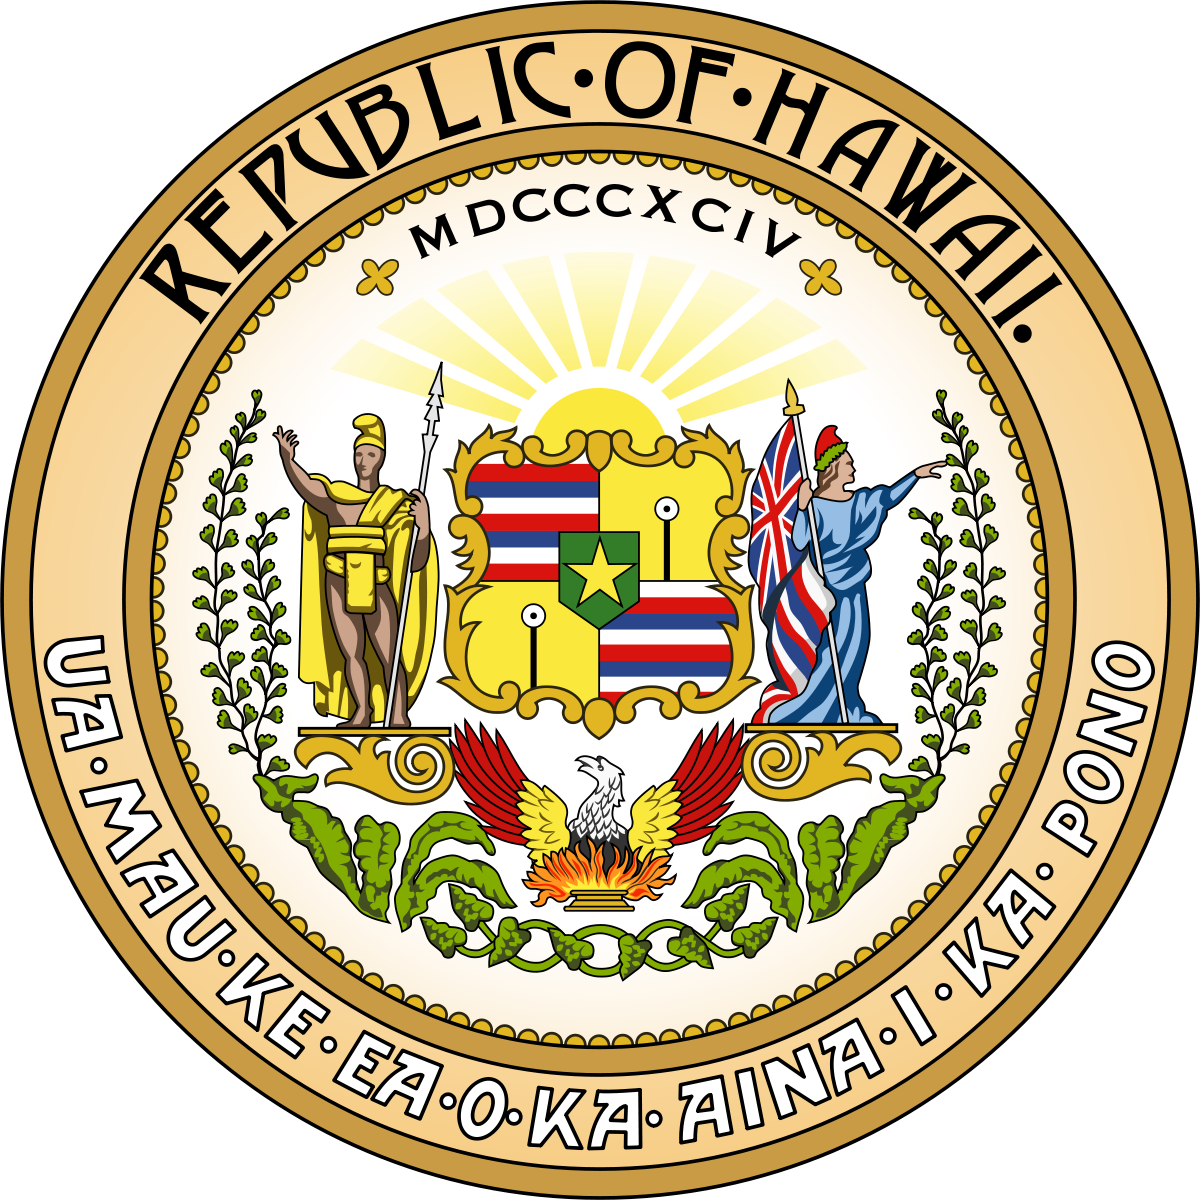 Government clipart republic government. Of hawaii wikipedia 